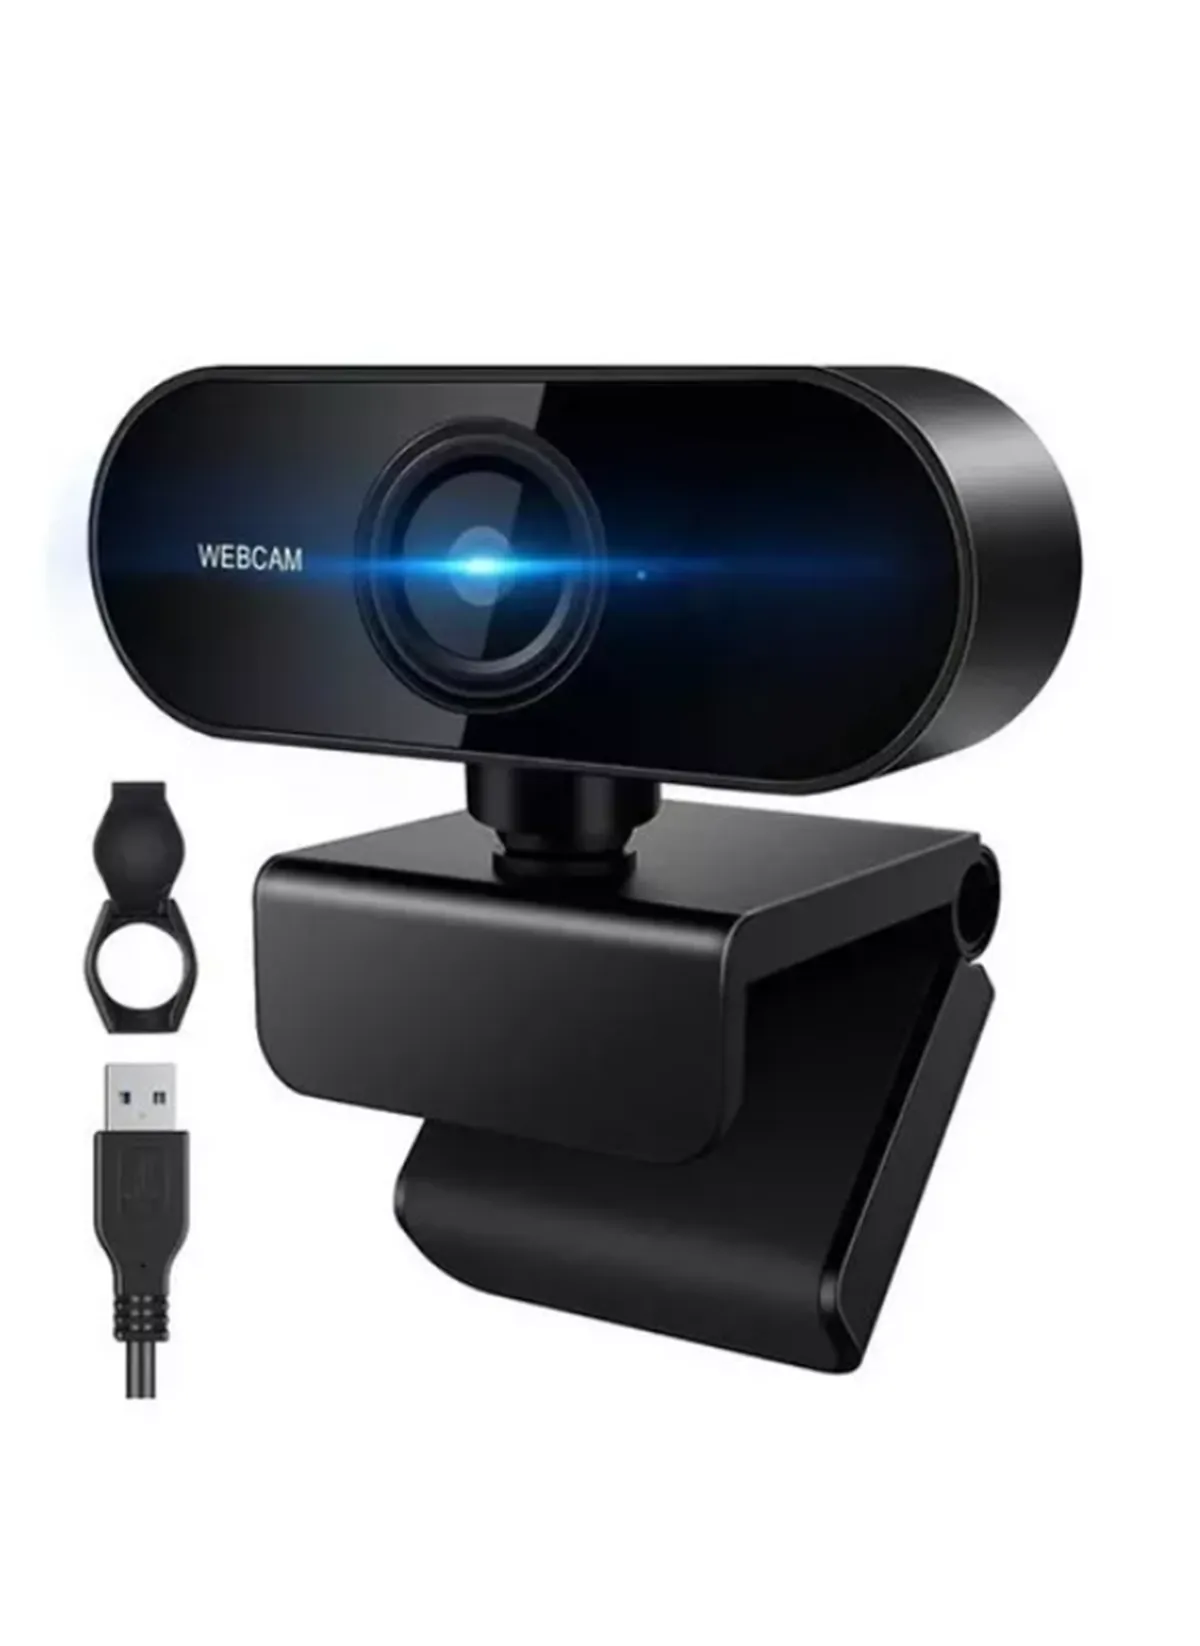 Camara Webcam Full Hd 1080p Loho Web Computador Video